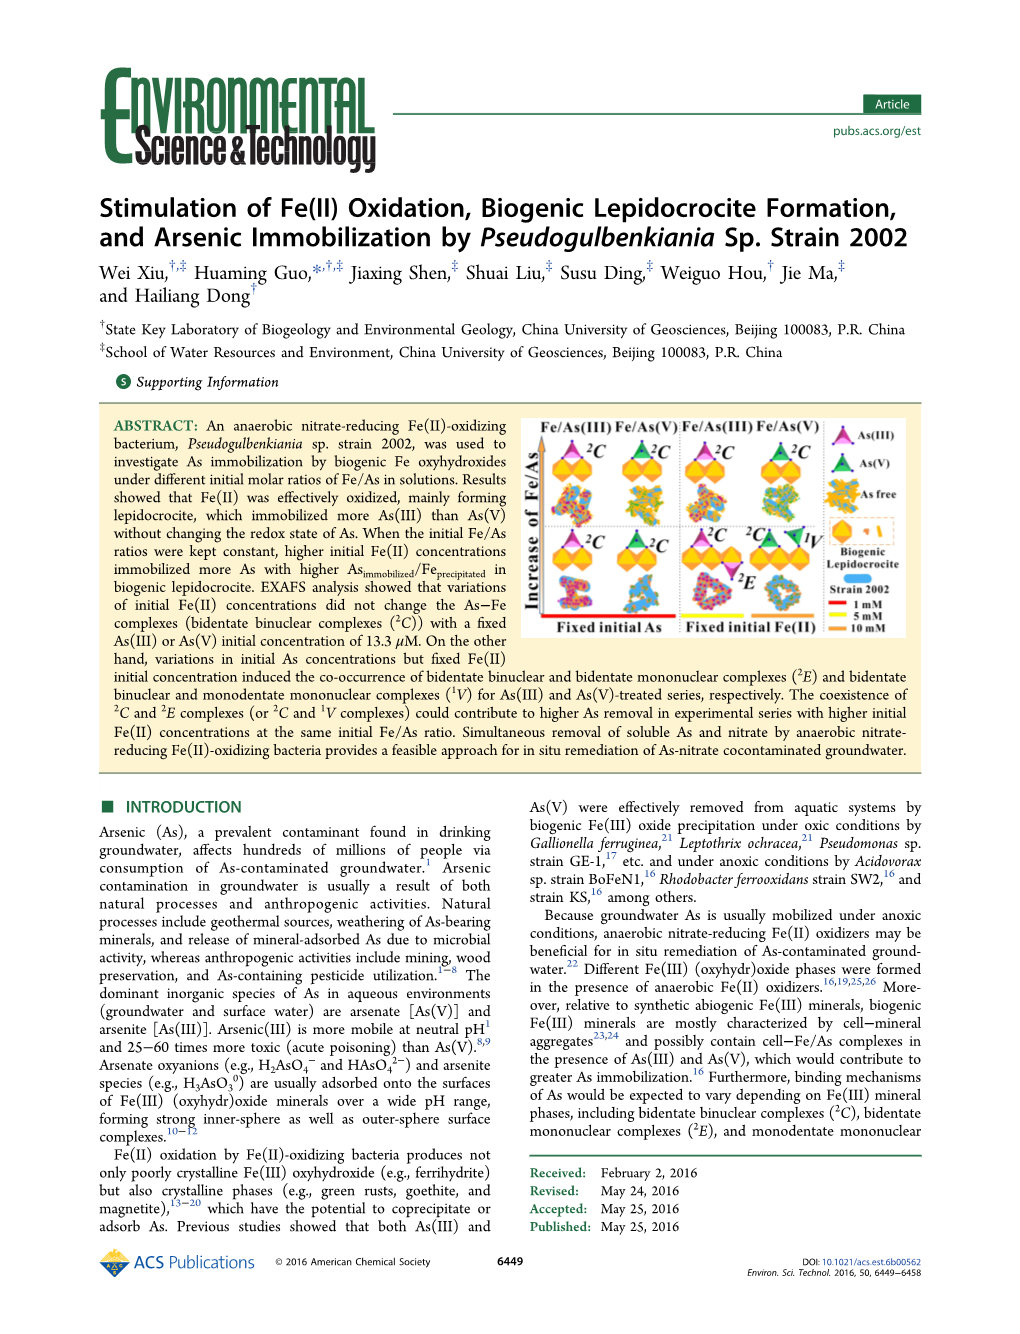 Stimulation of Fe(II) Oxidation, Biogenic Lepidocrocite Formation, and Arsenic Immobilization by Pseudogulbenkiania Sp